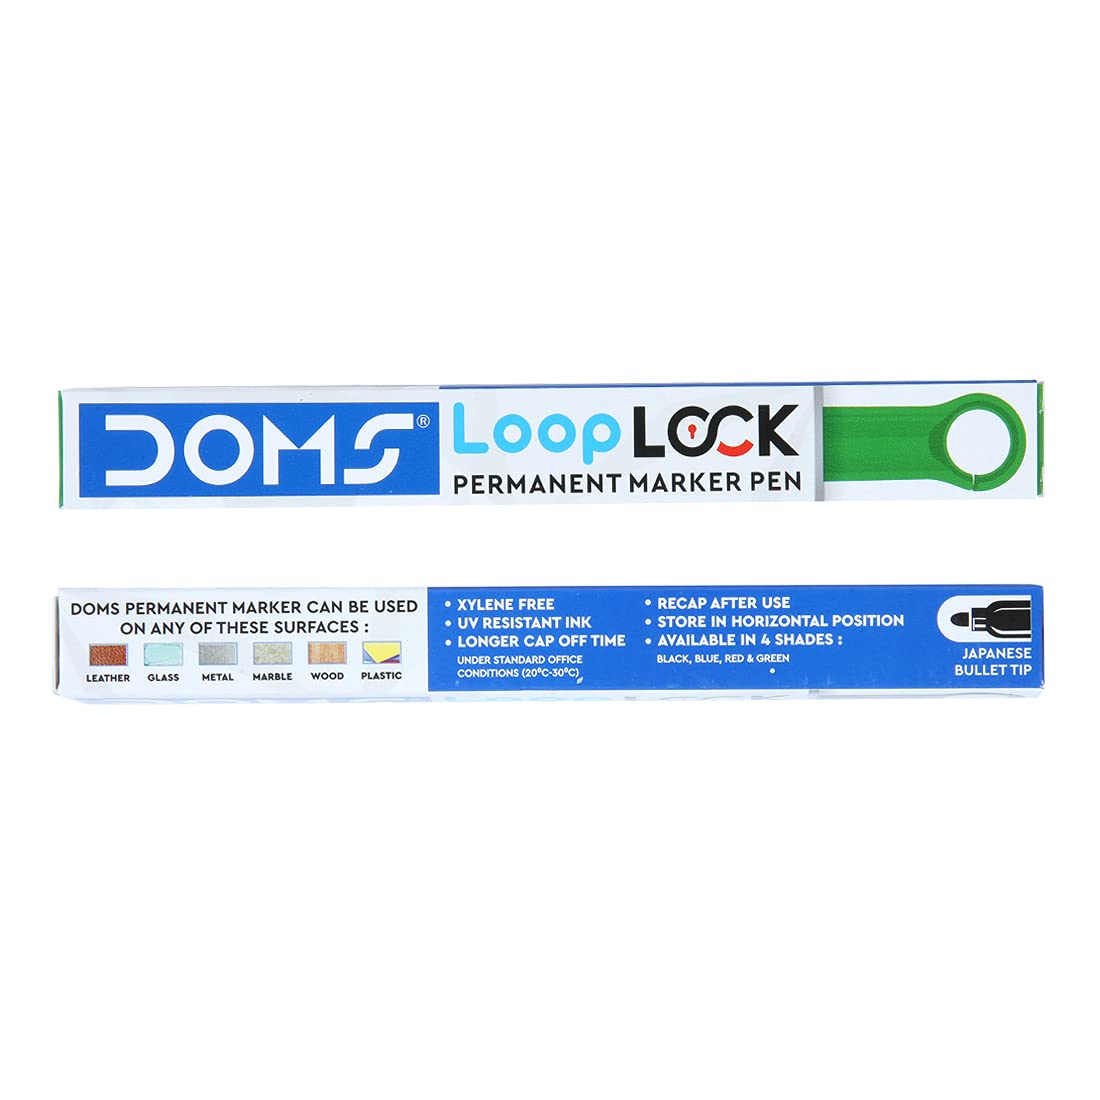 Doms Refilo Non-Toxic Hi-Tech Refillable Loop Lock Permanent Marker Pen (GREEN)